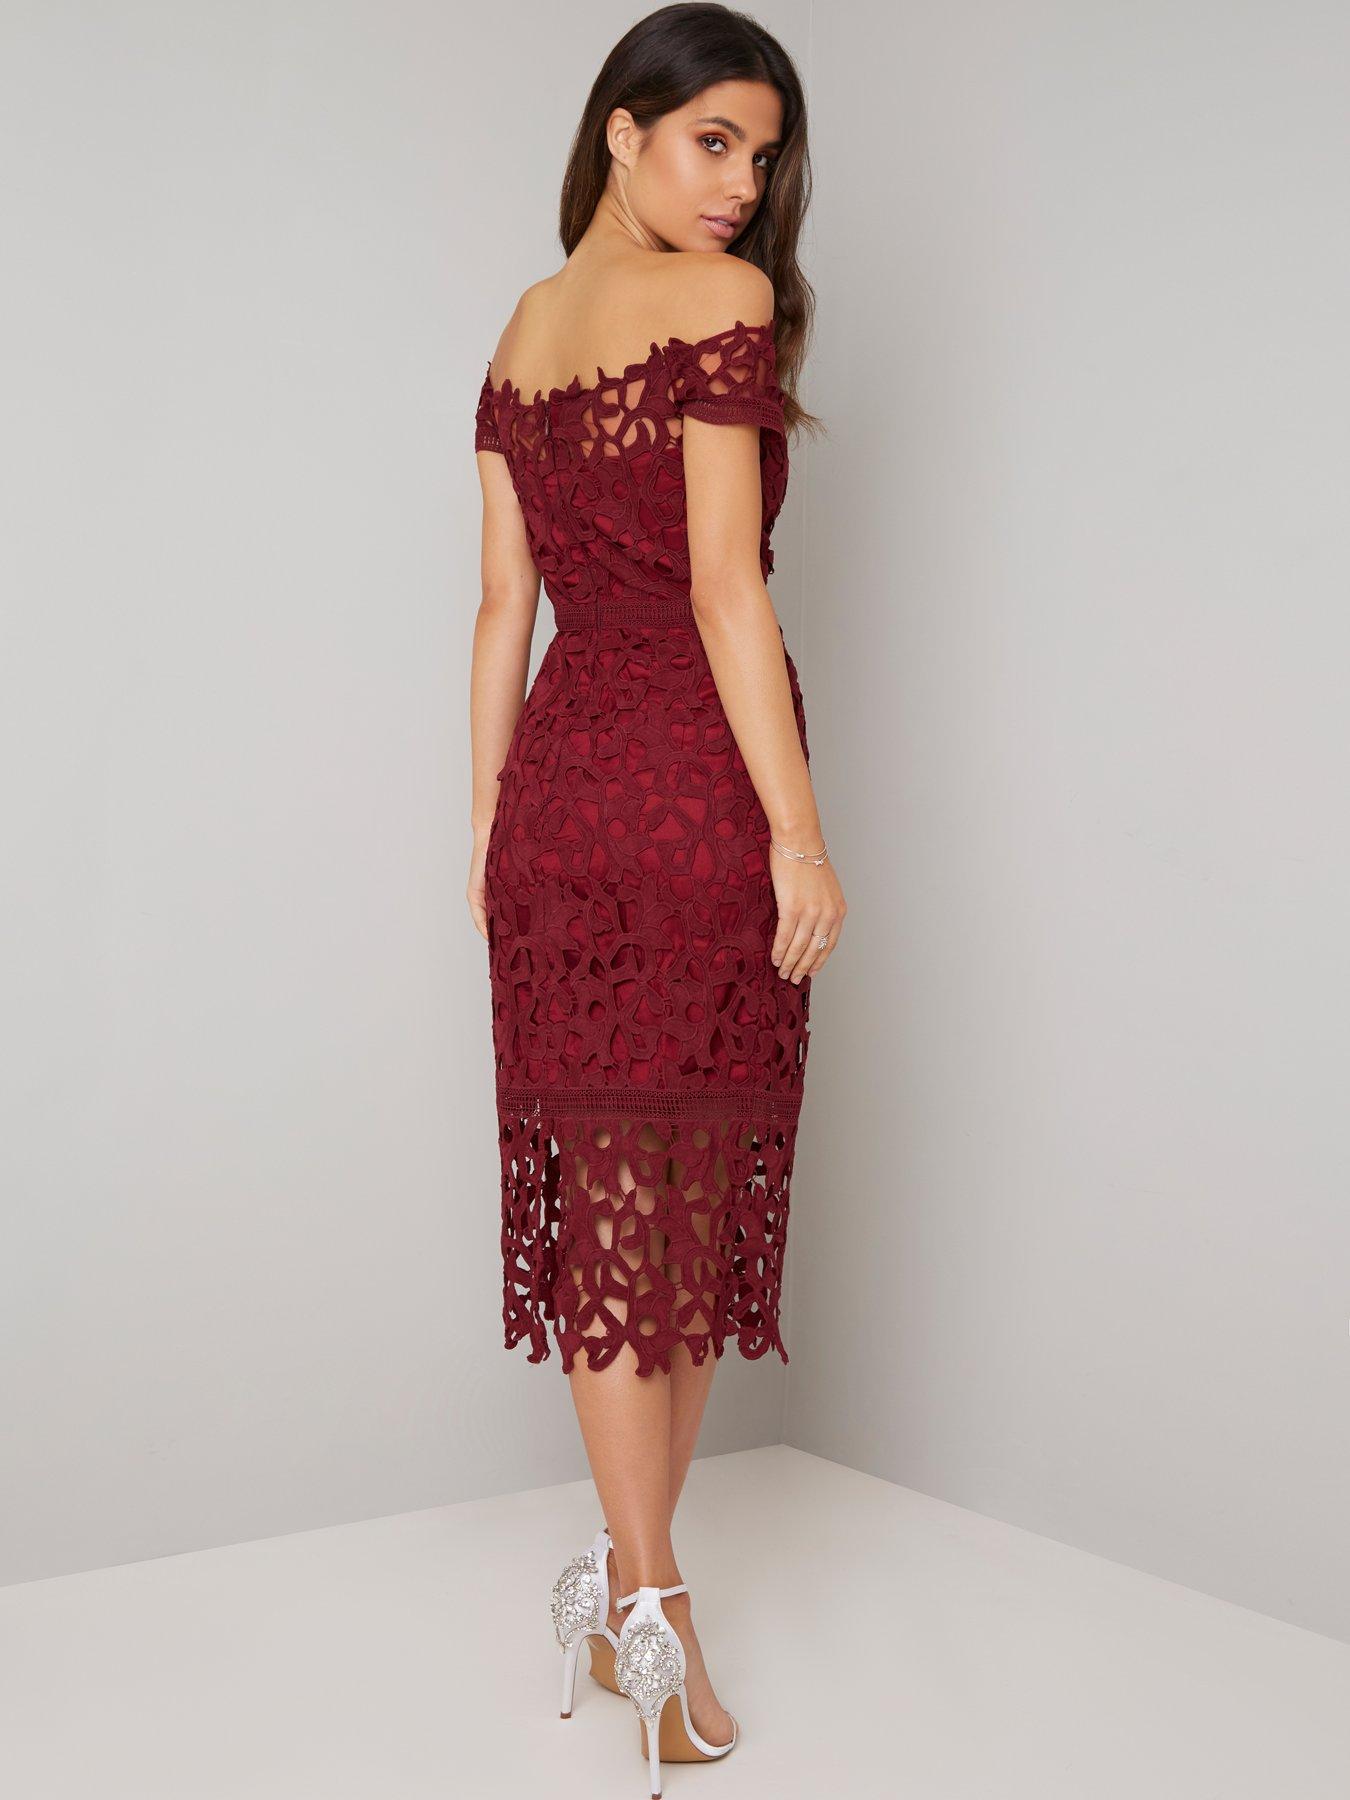 burgundy bardot dress